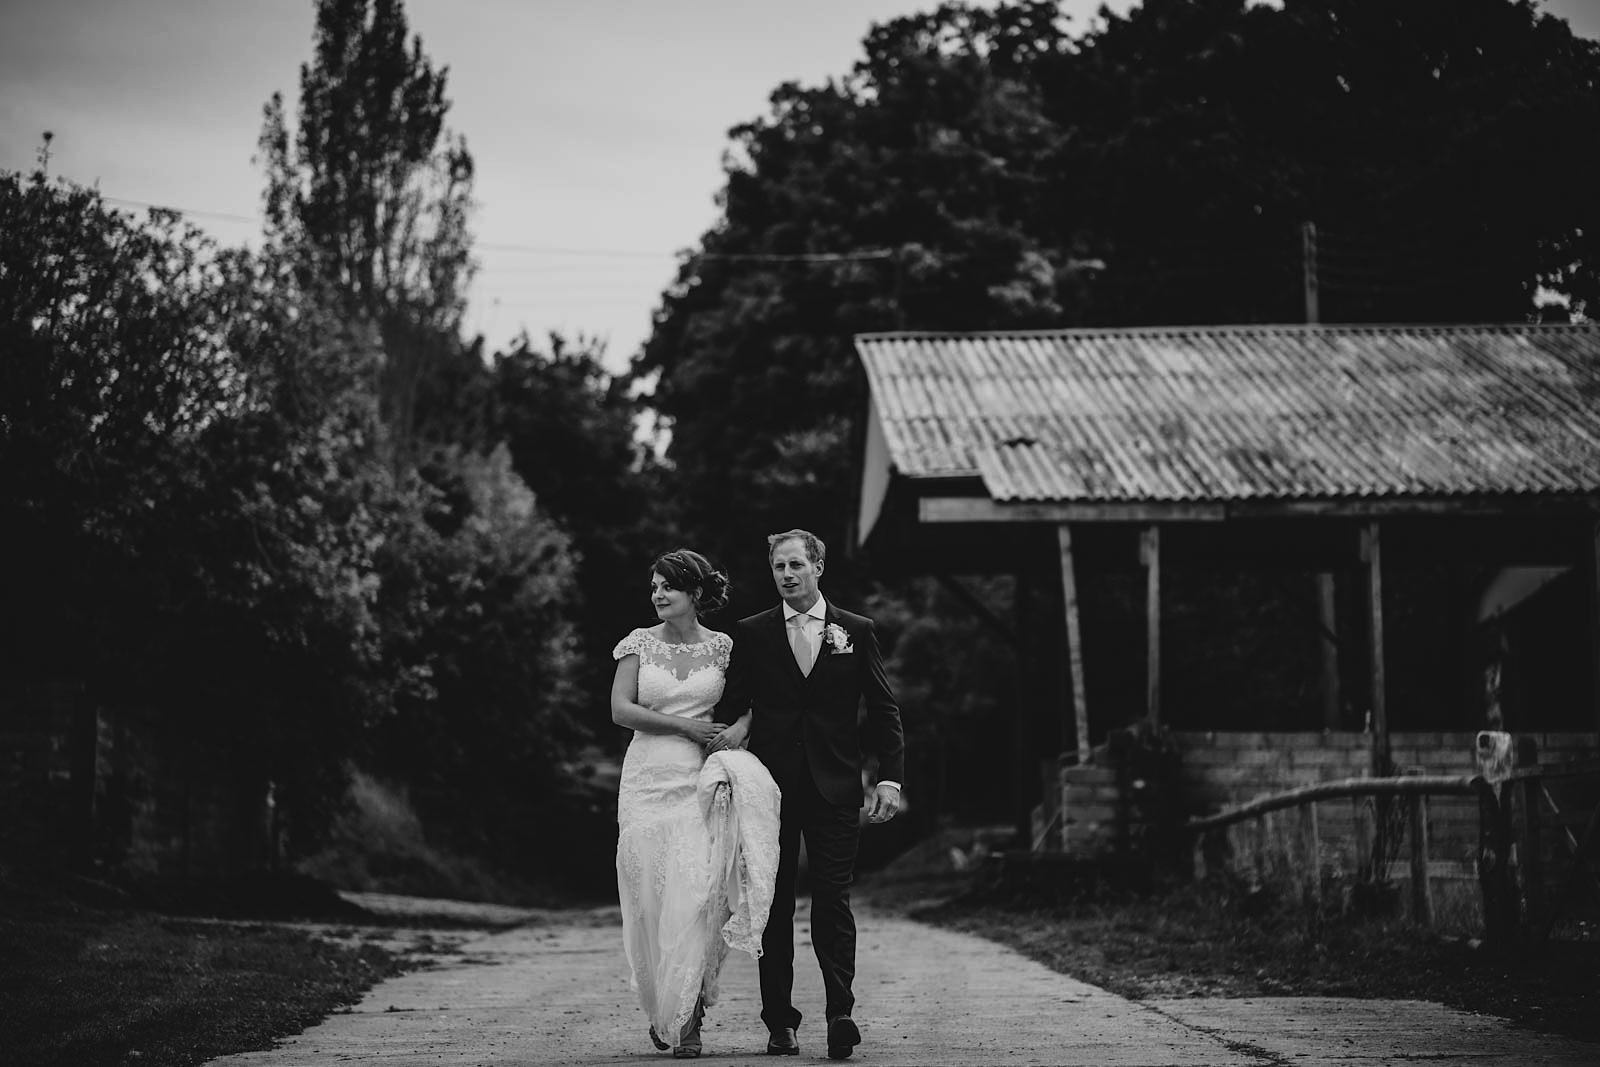 Huntstile Farm Wedding Photography